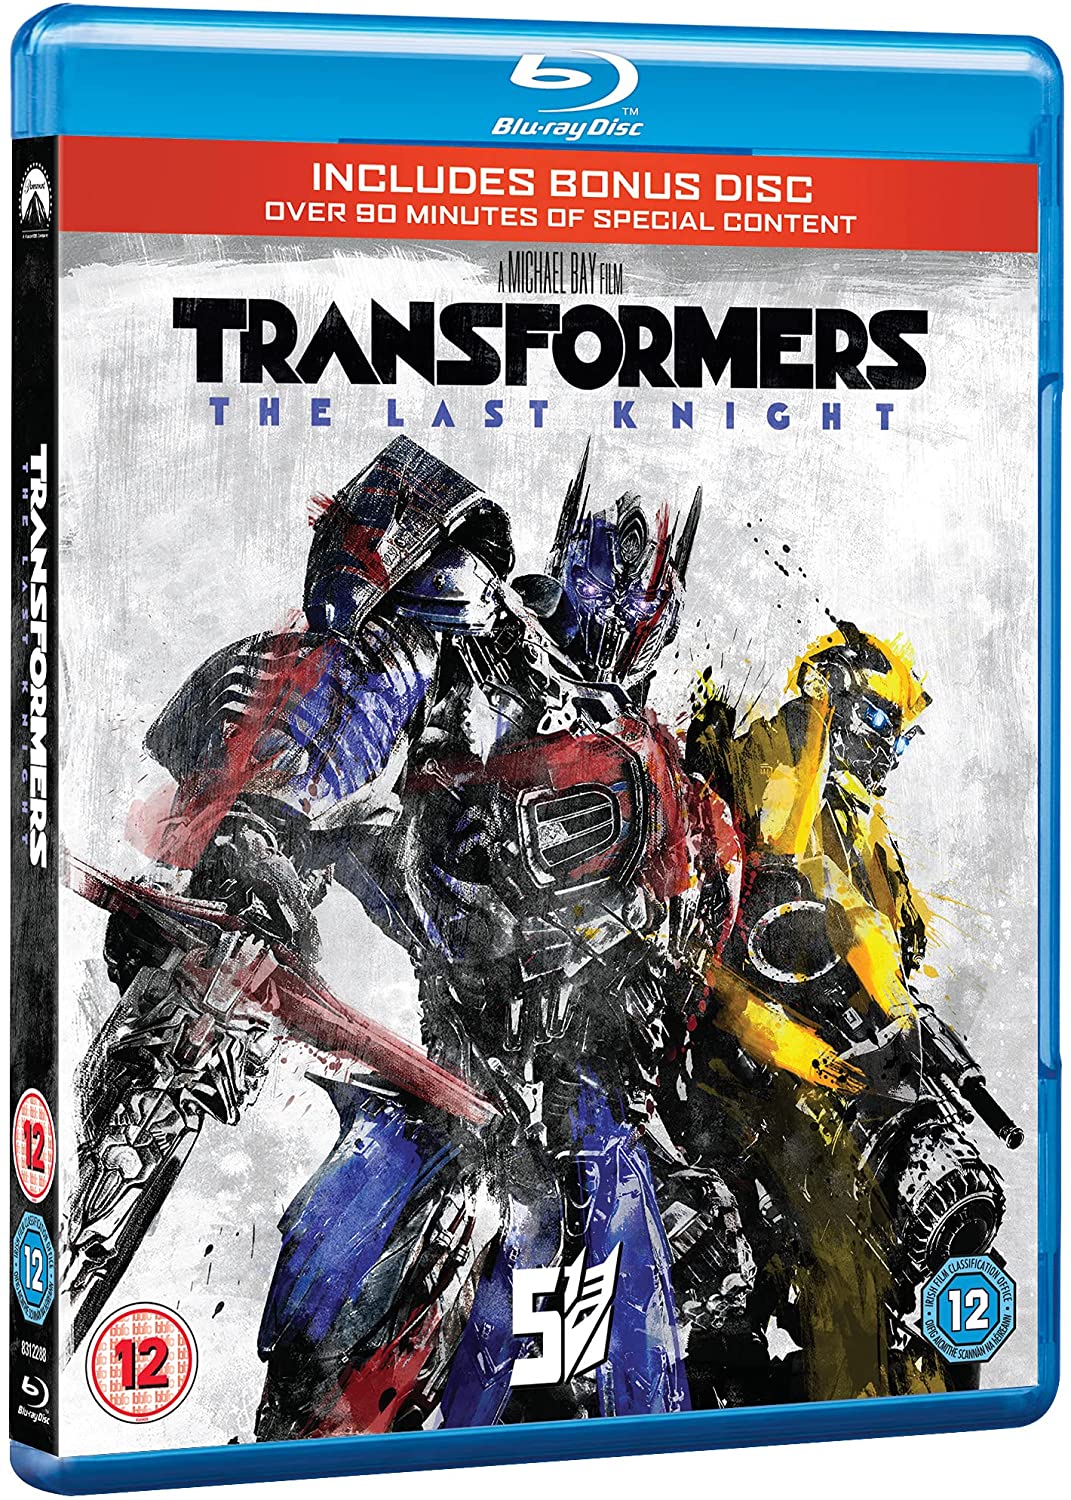 Transformers: The Last Knight (BD+ Bonus disc BD) [Blu-ray] [2017] [Region Free]